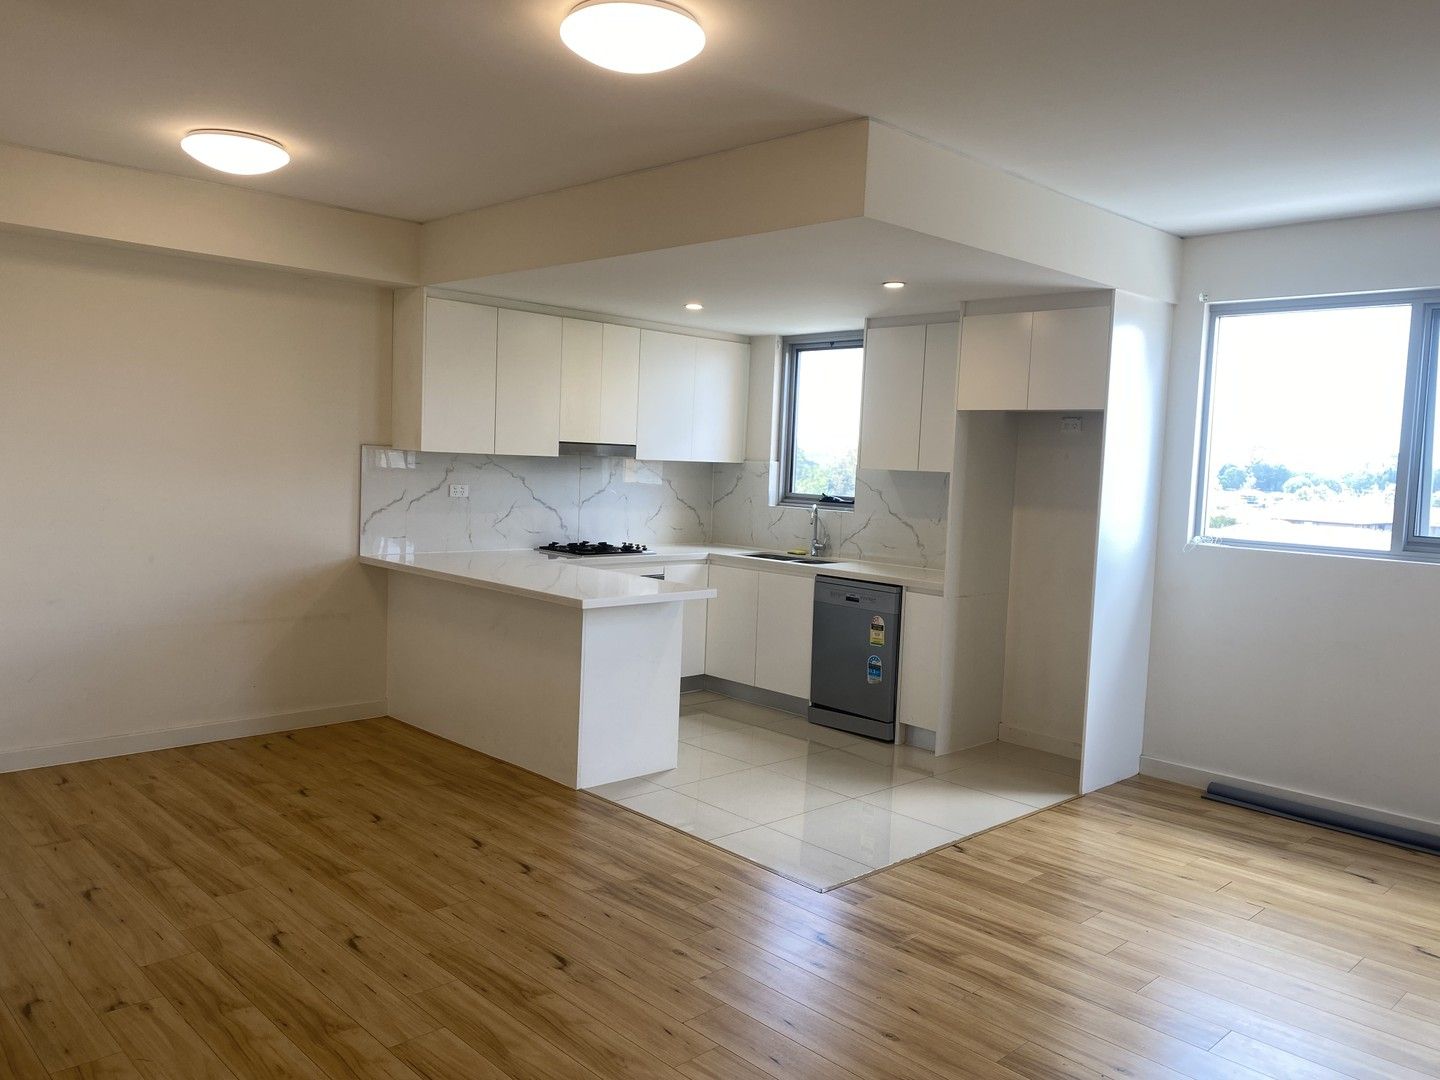 2 bedrooms Apartment / Unit / Flat in 403/273-277 Burwood Road BELMORE NSW, 2192